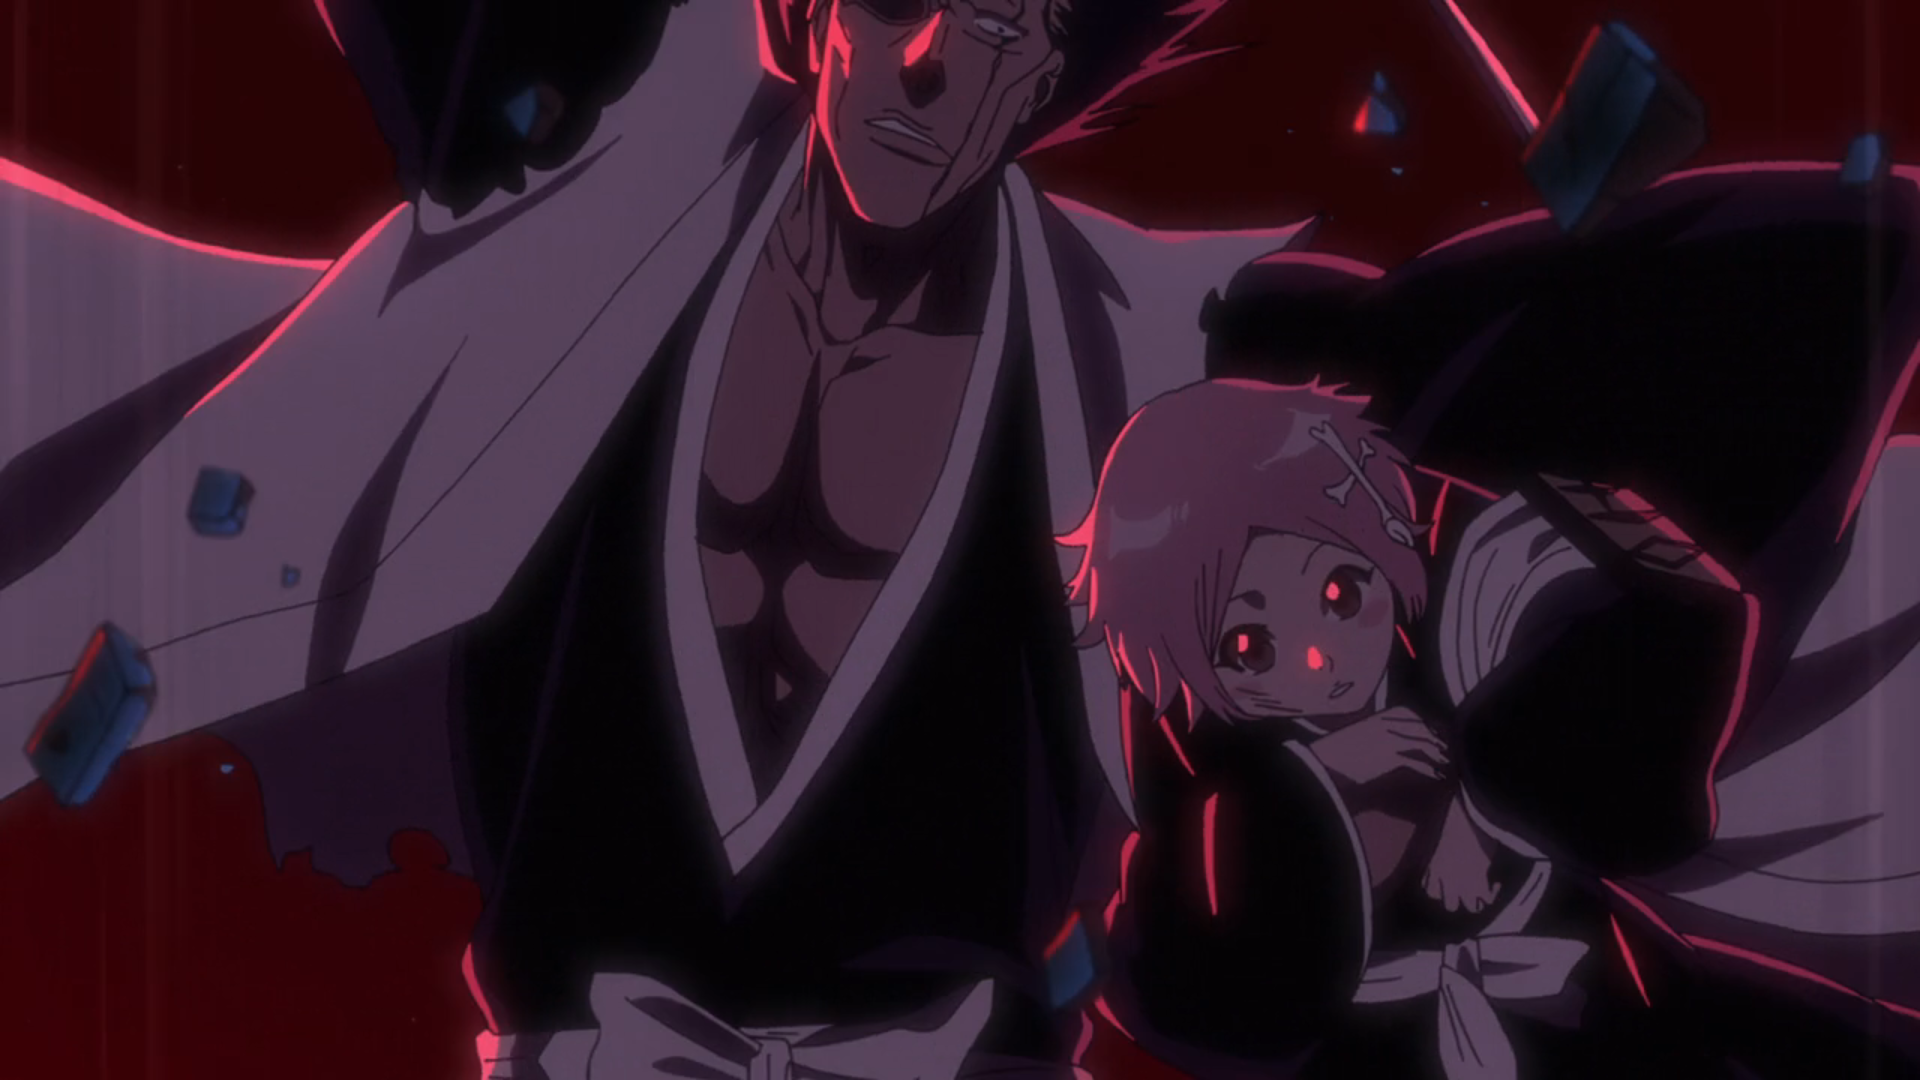 Bleach: Thousand Year Blood War Episode #18 Anime Review